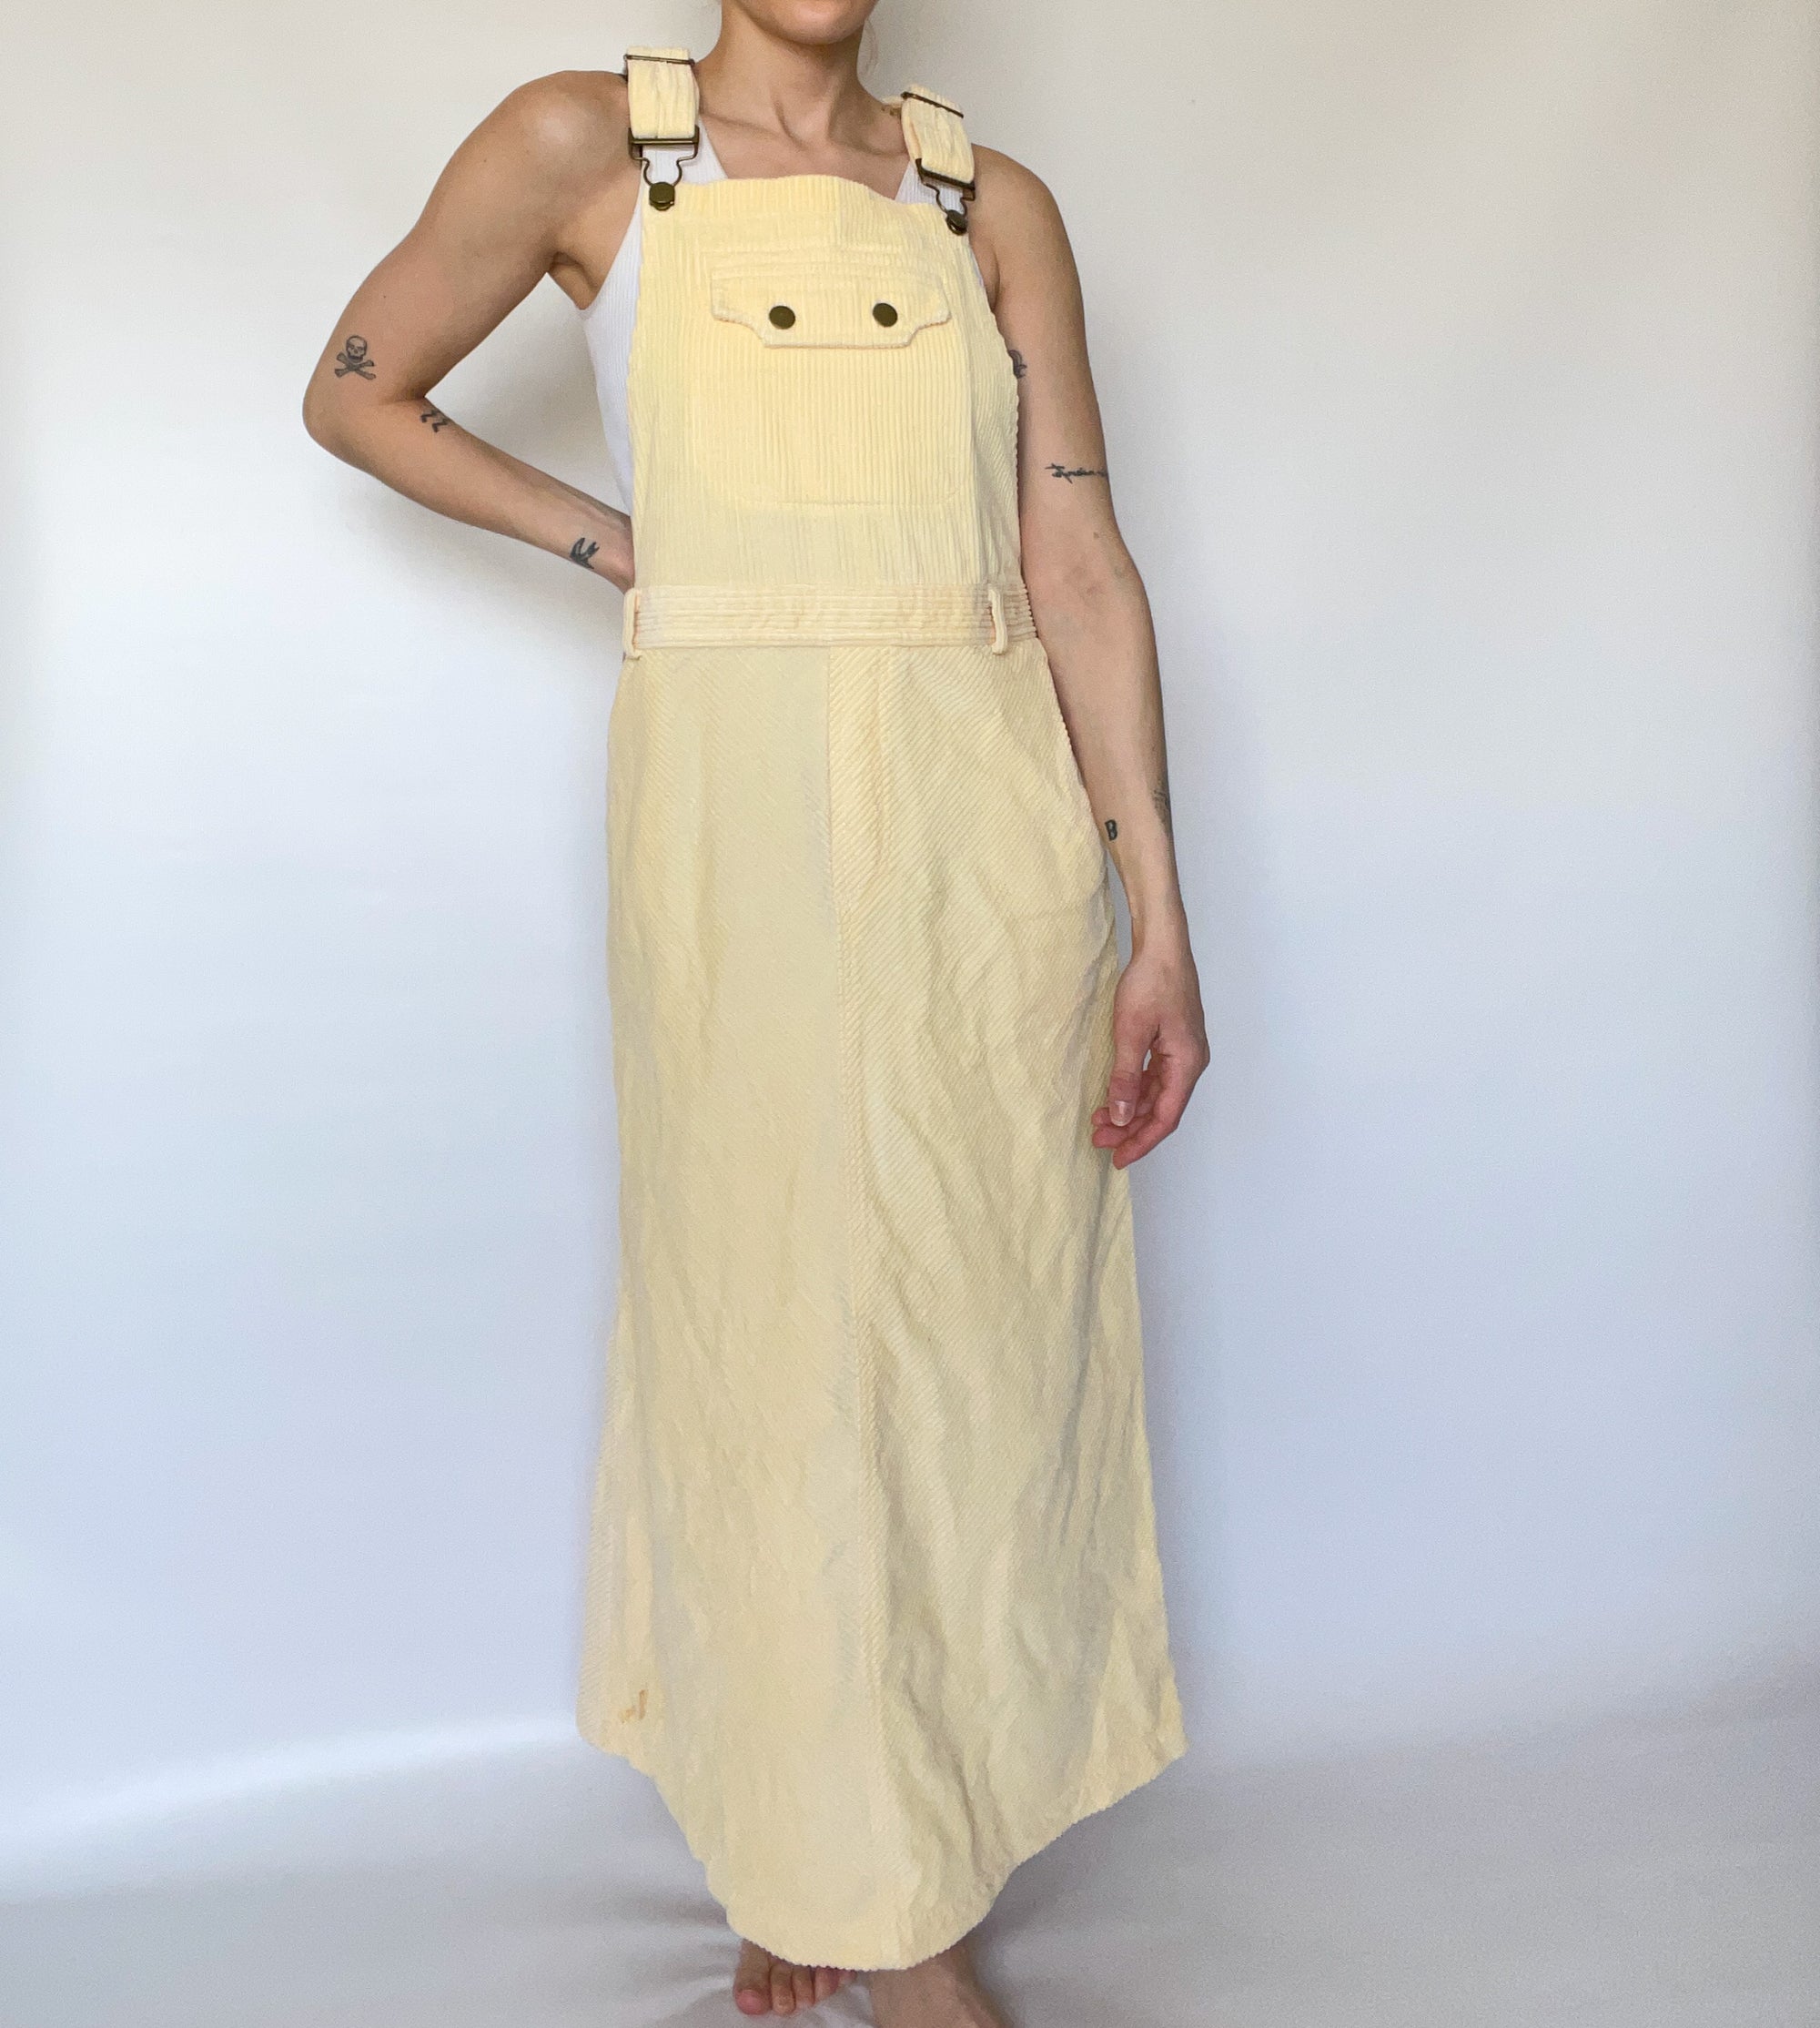 Yellow Corduroy Bib Dress